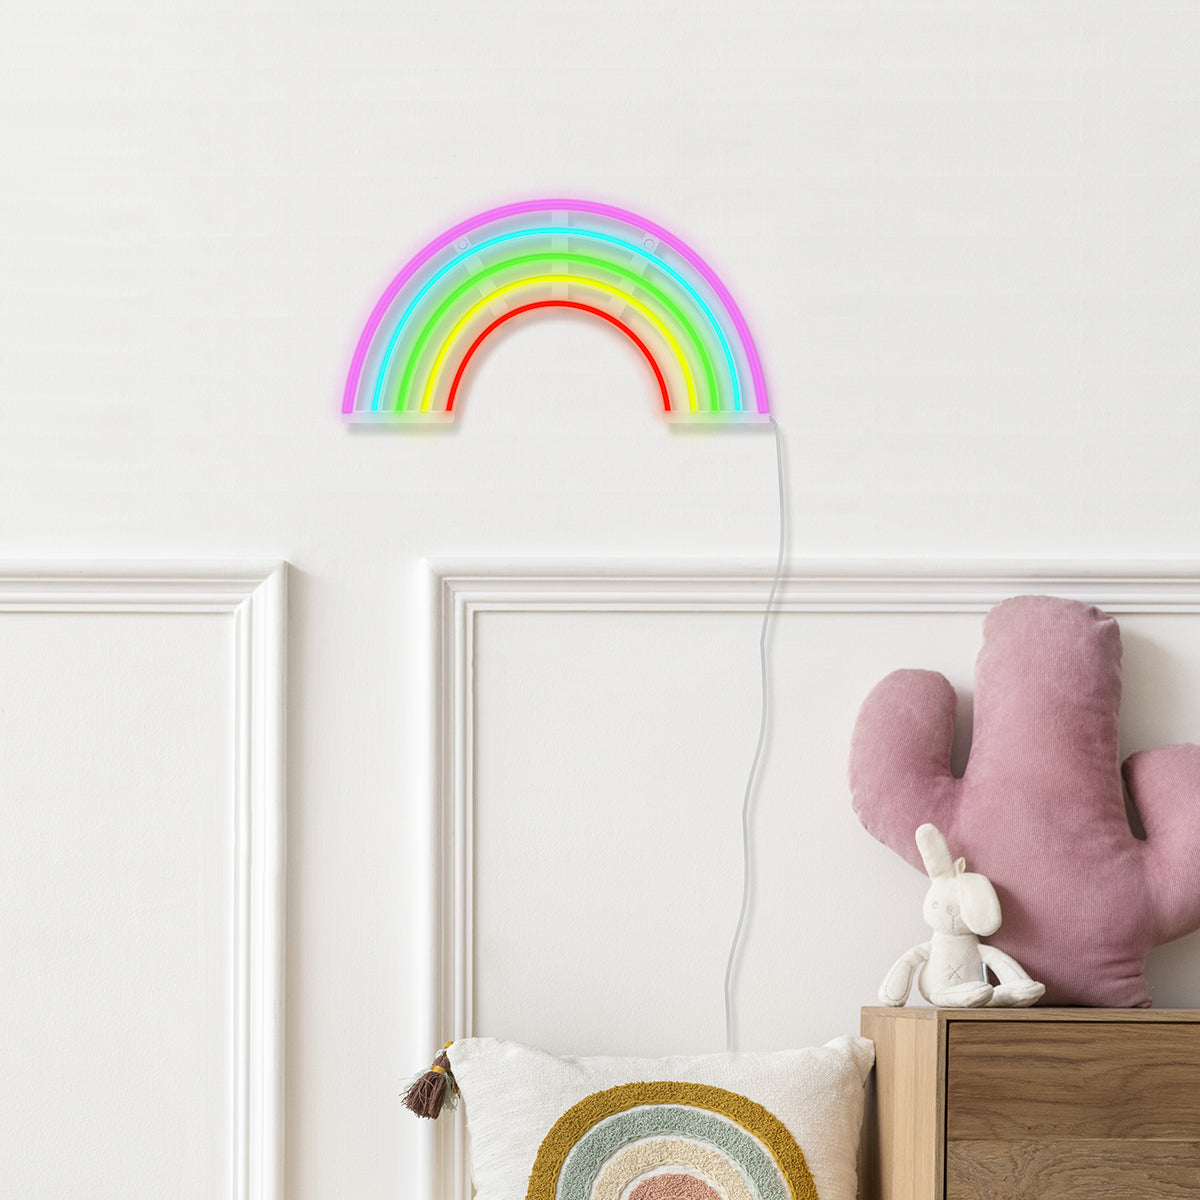 "Rainbow" LED Sign